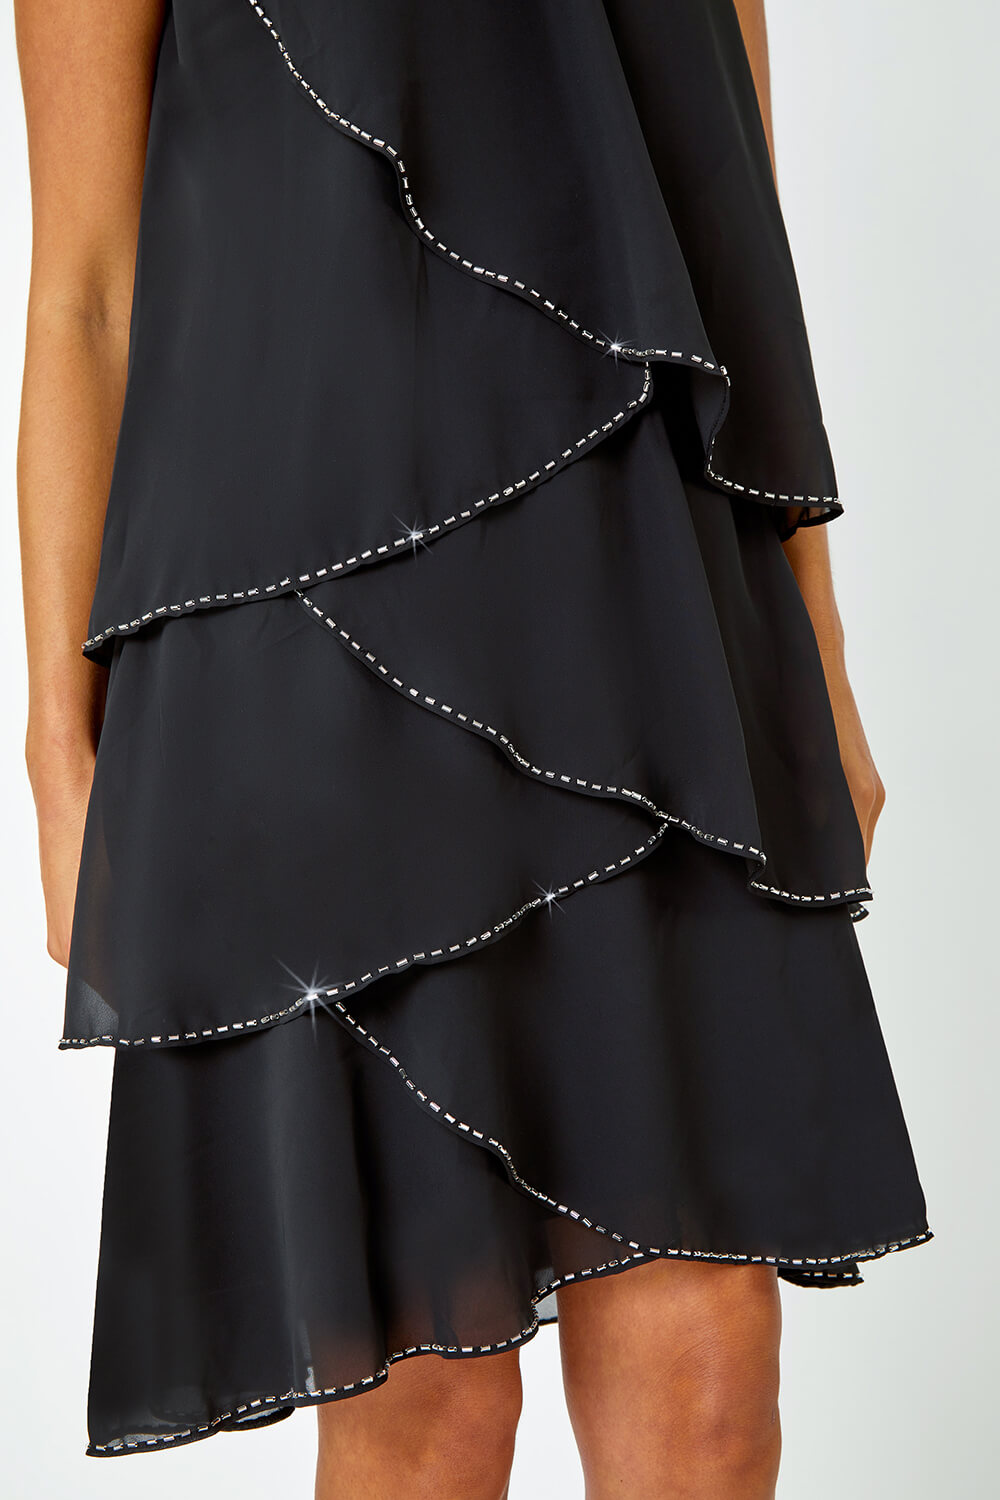 Black Sequin Trim Tiered Halterneck Dress, Image 5 of 6